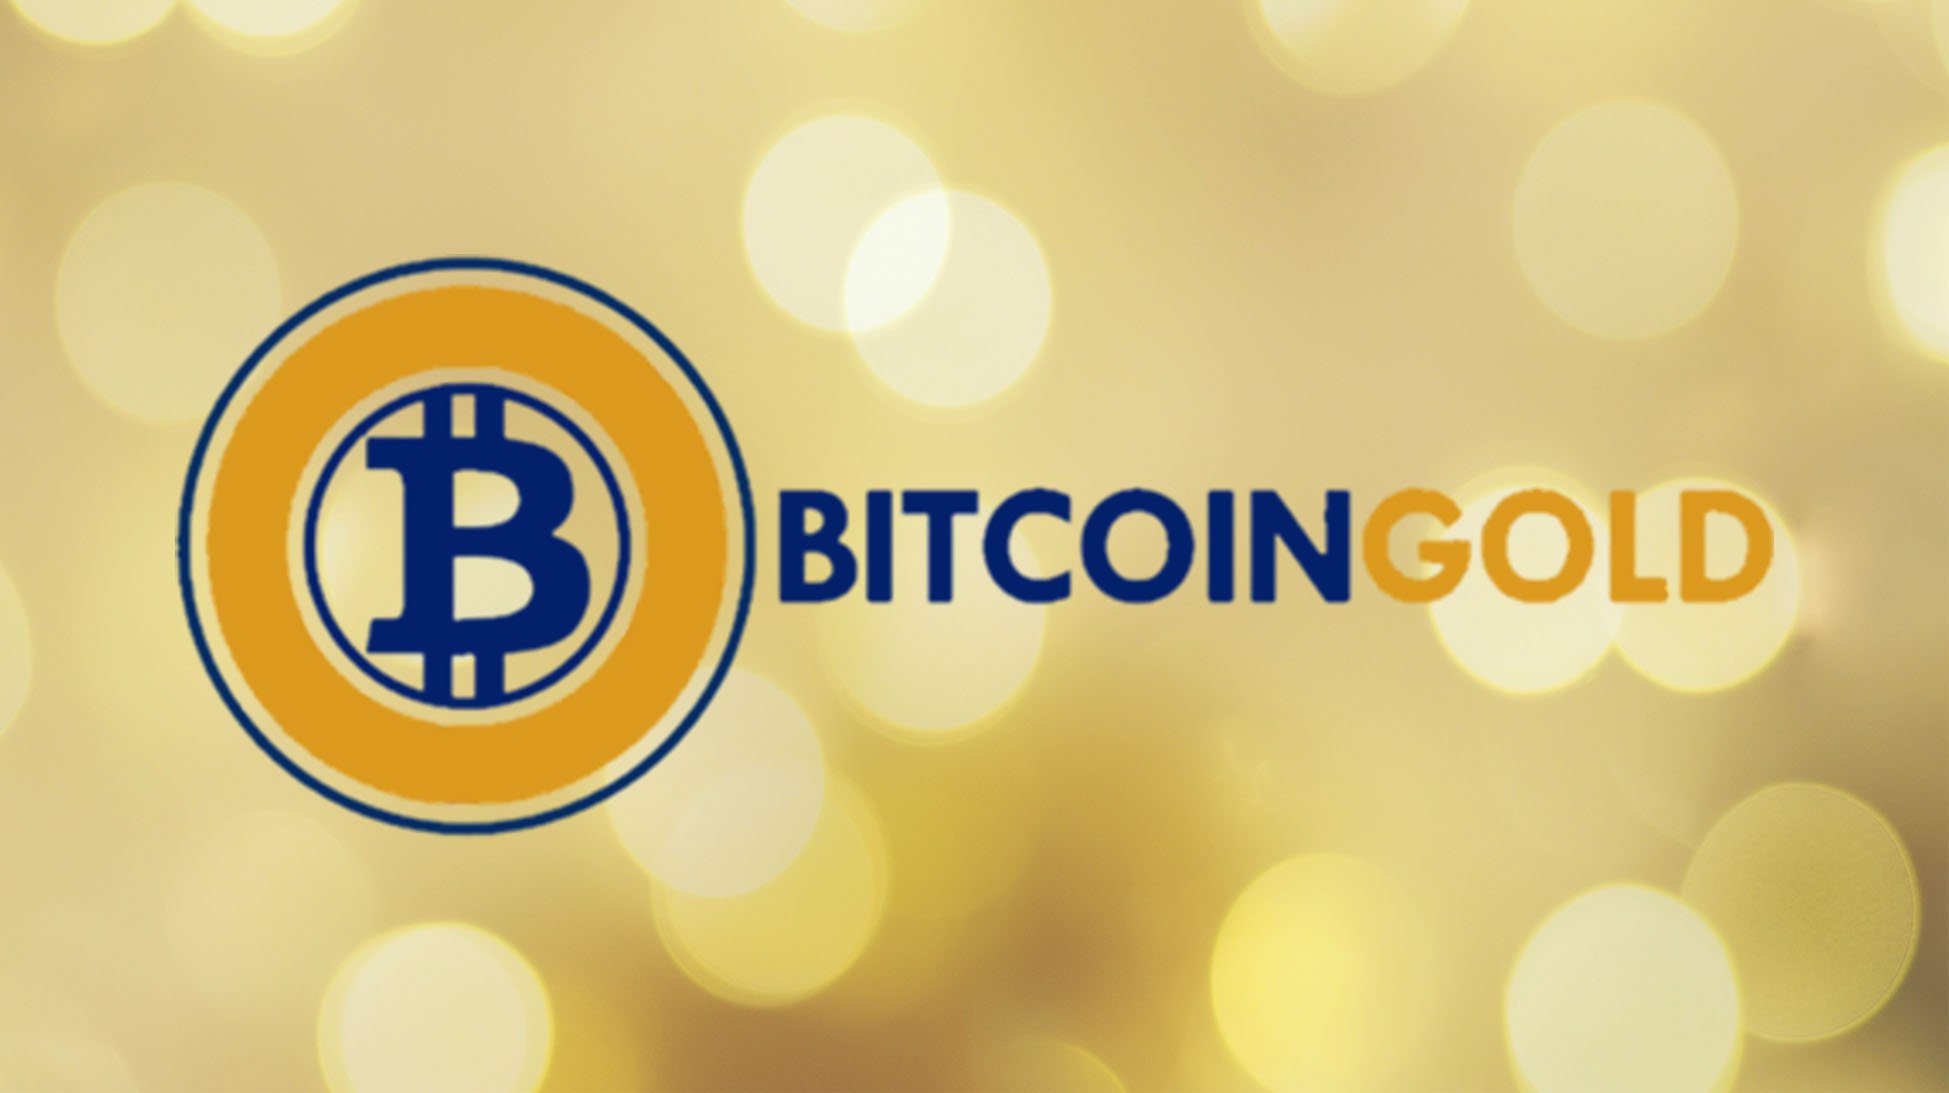 Gdax bitcoin gold crypto friendly email marketing